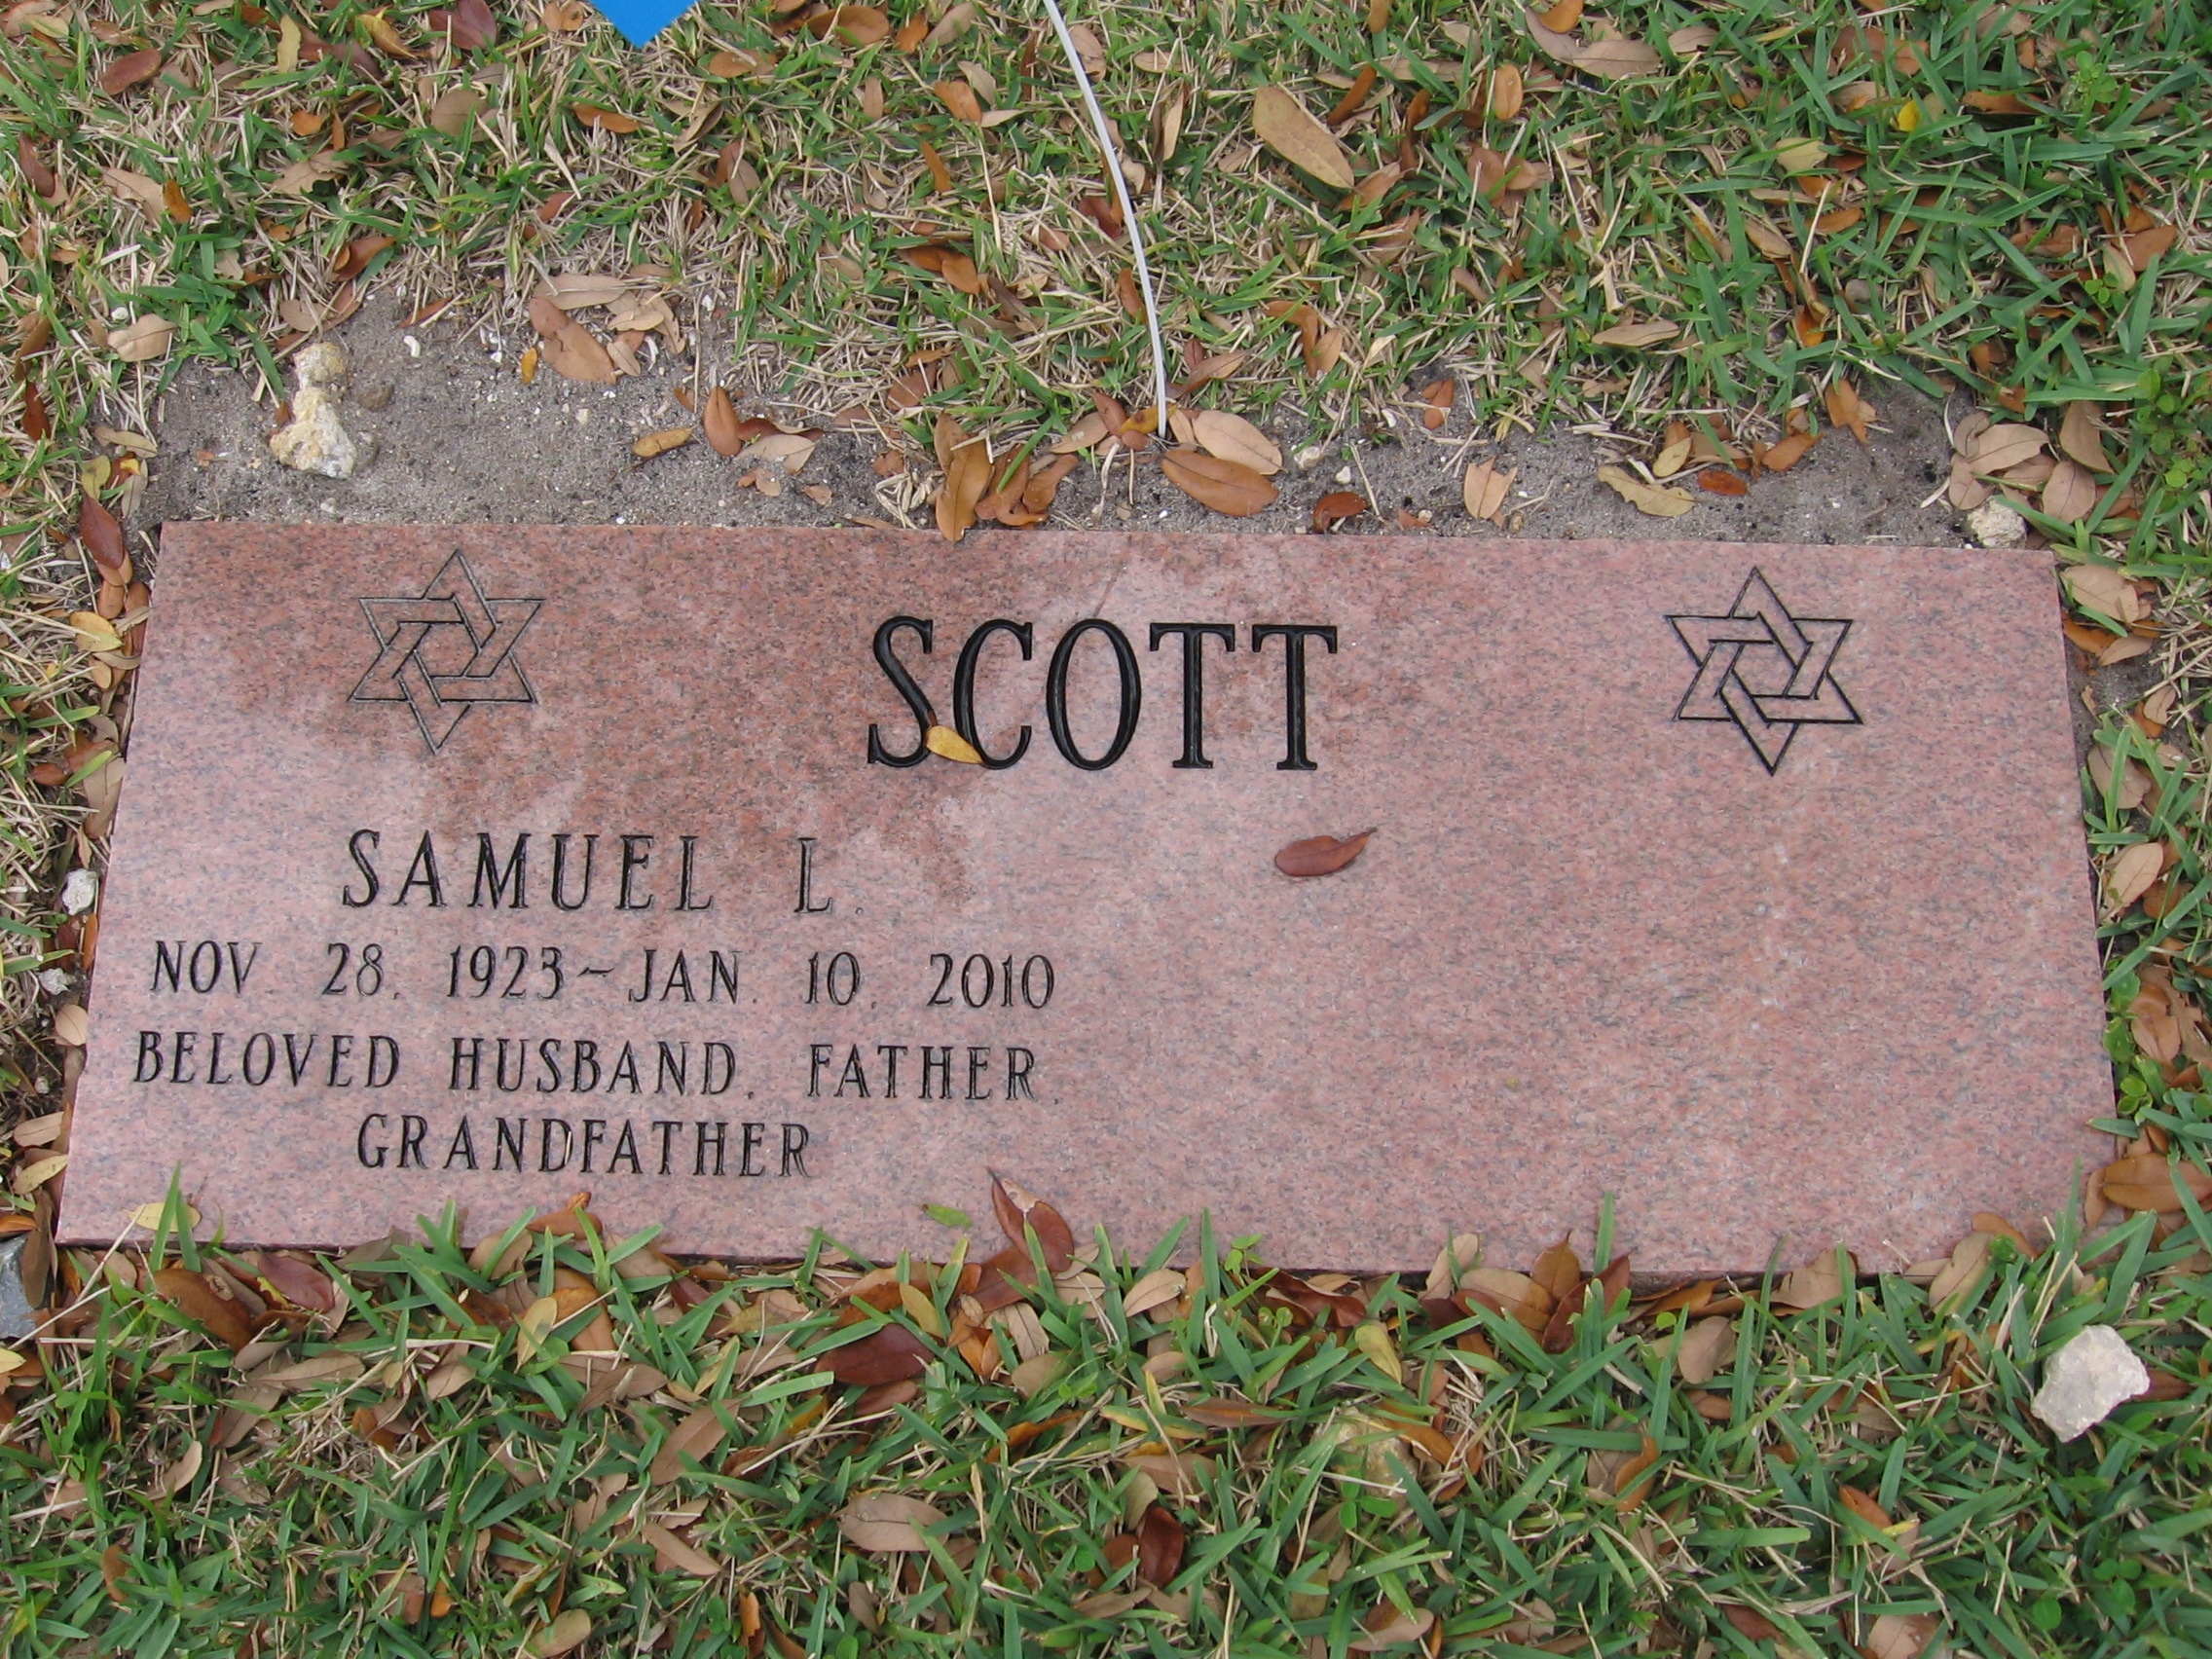 Samuel L Scott